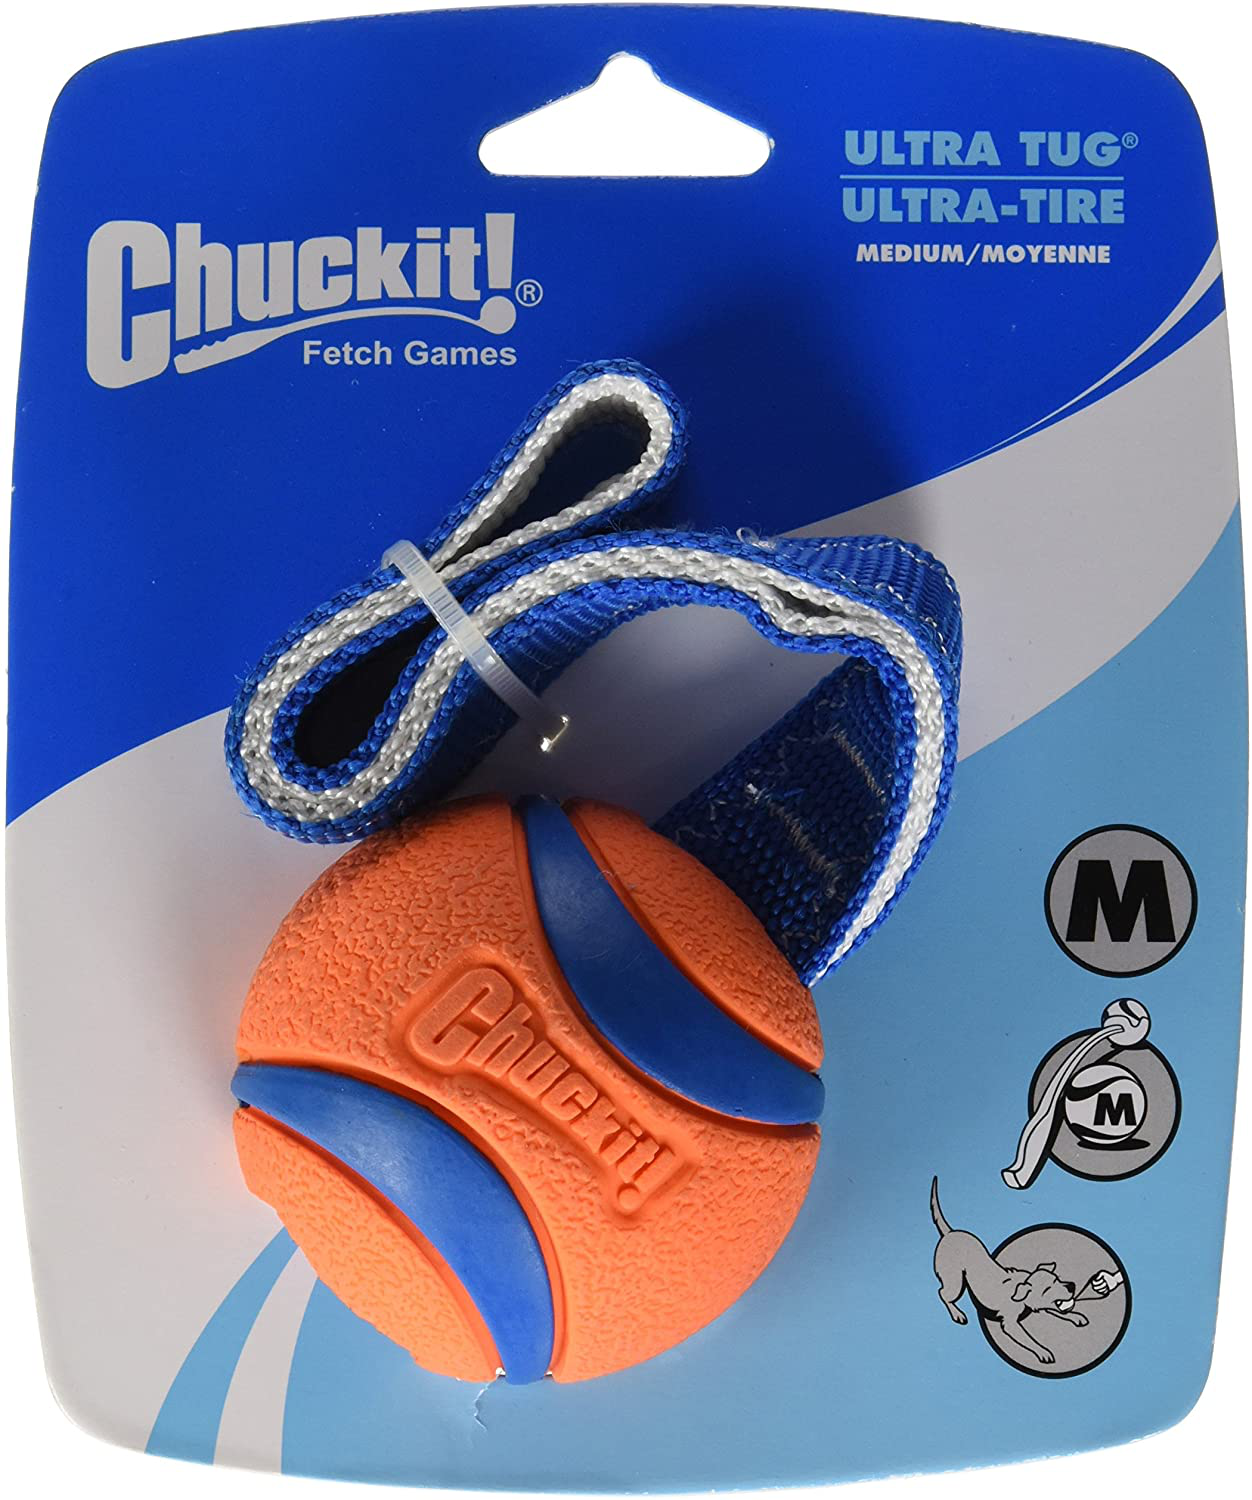 Chuckit! Ultra Tug Animals & Pet Supplies > Pet Supplies > Dog Supplies > Dog Toys Chuckit!   